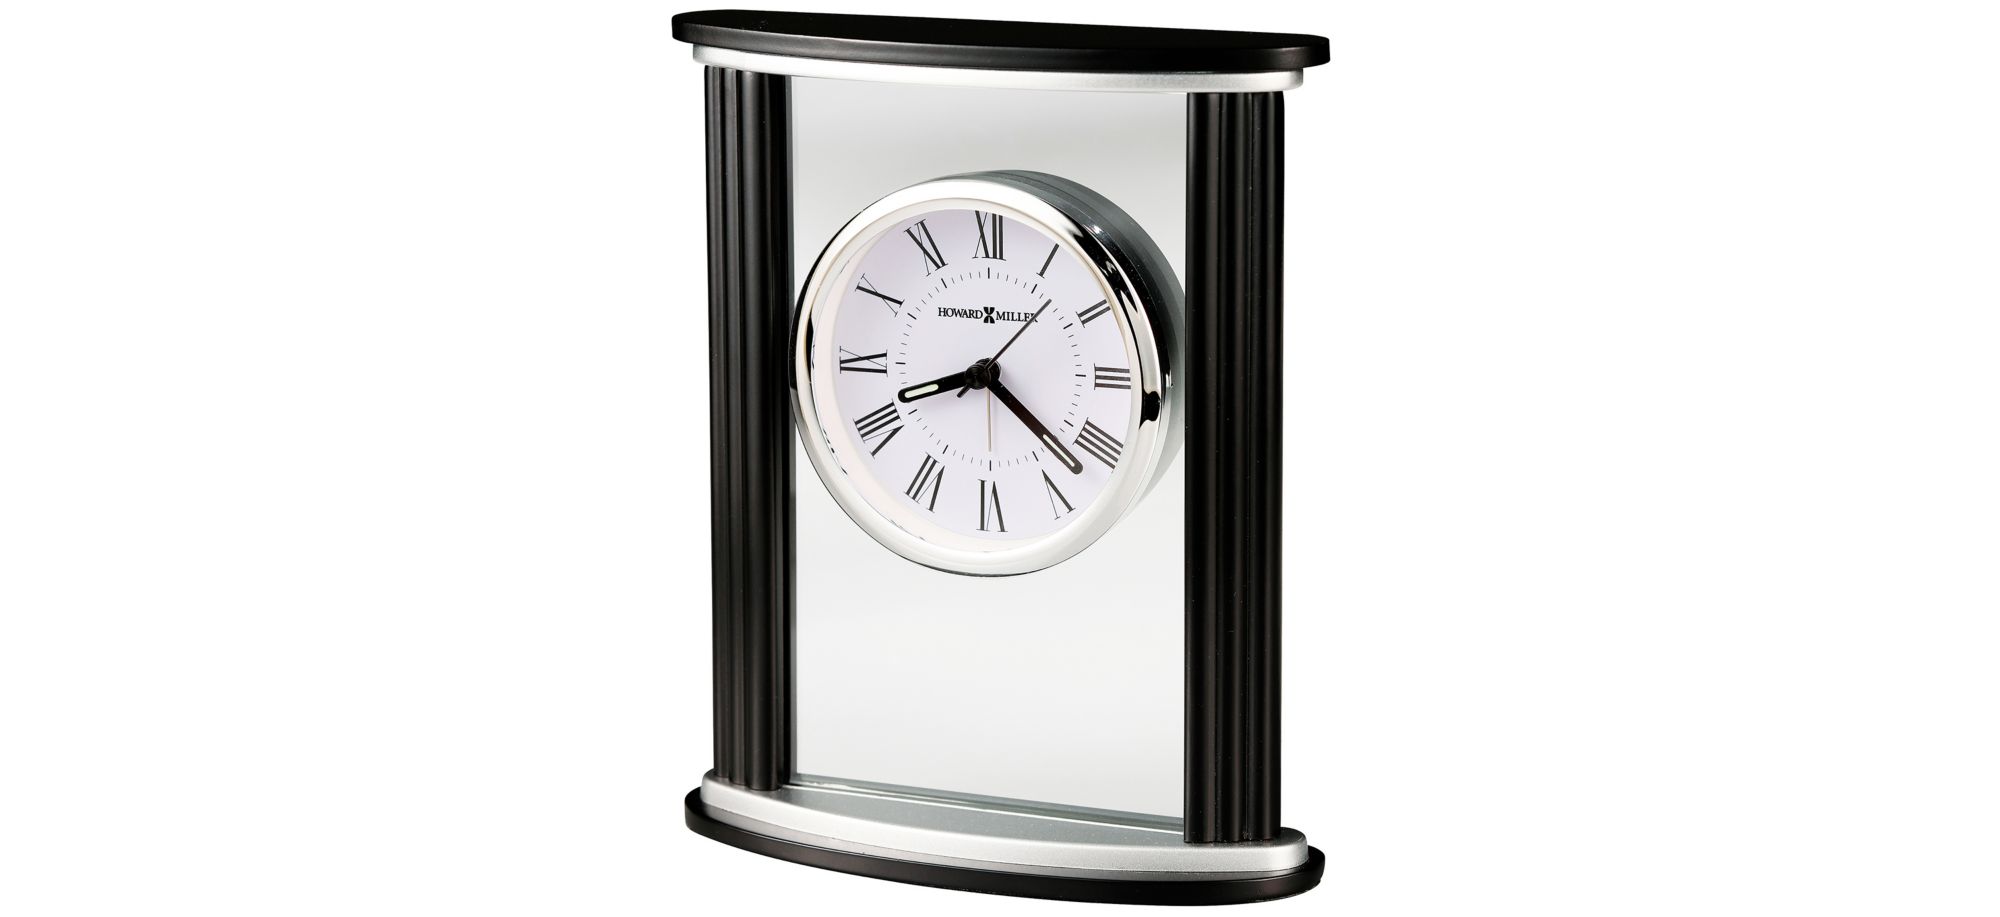 Cambridge Tabletop Clock in Black;Silver by Howard Miller